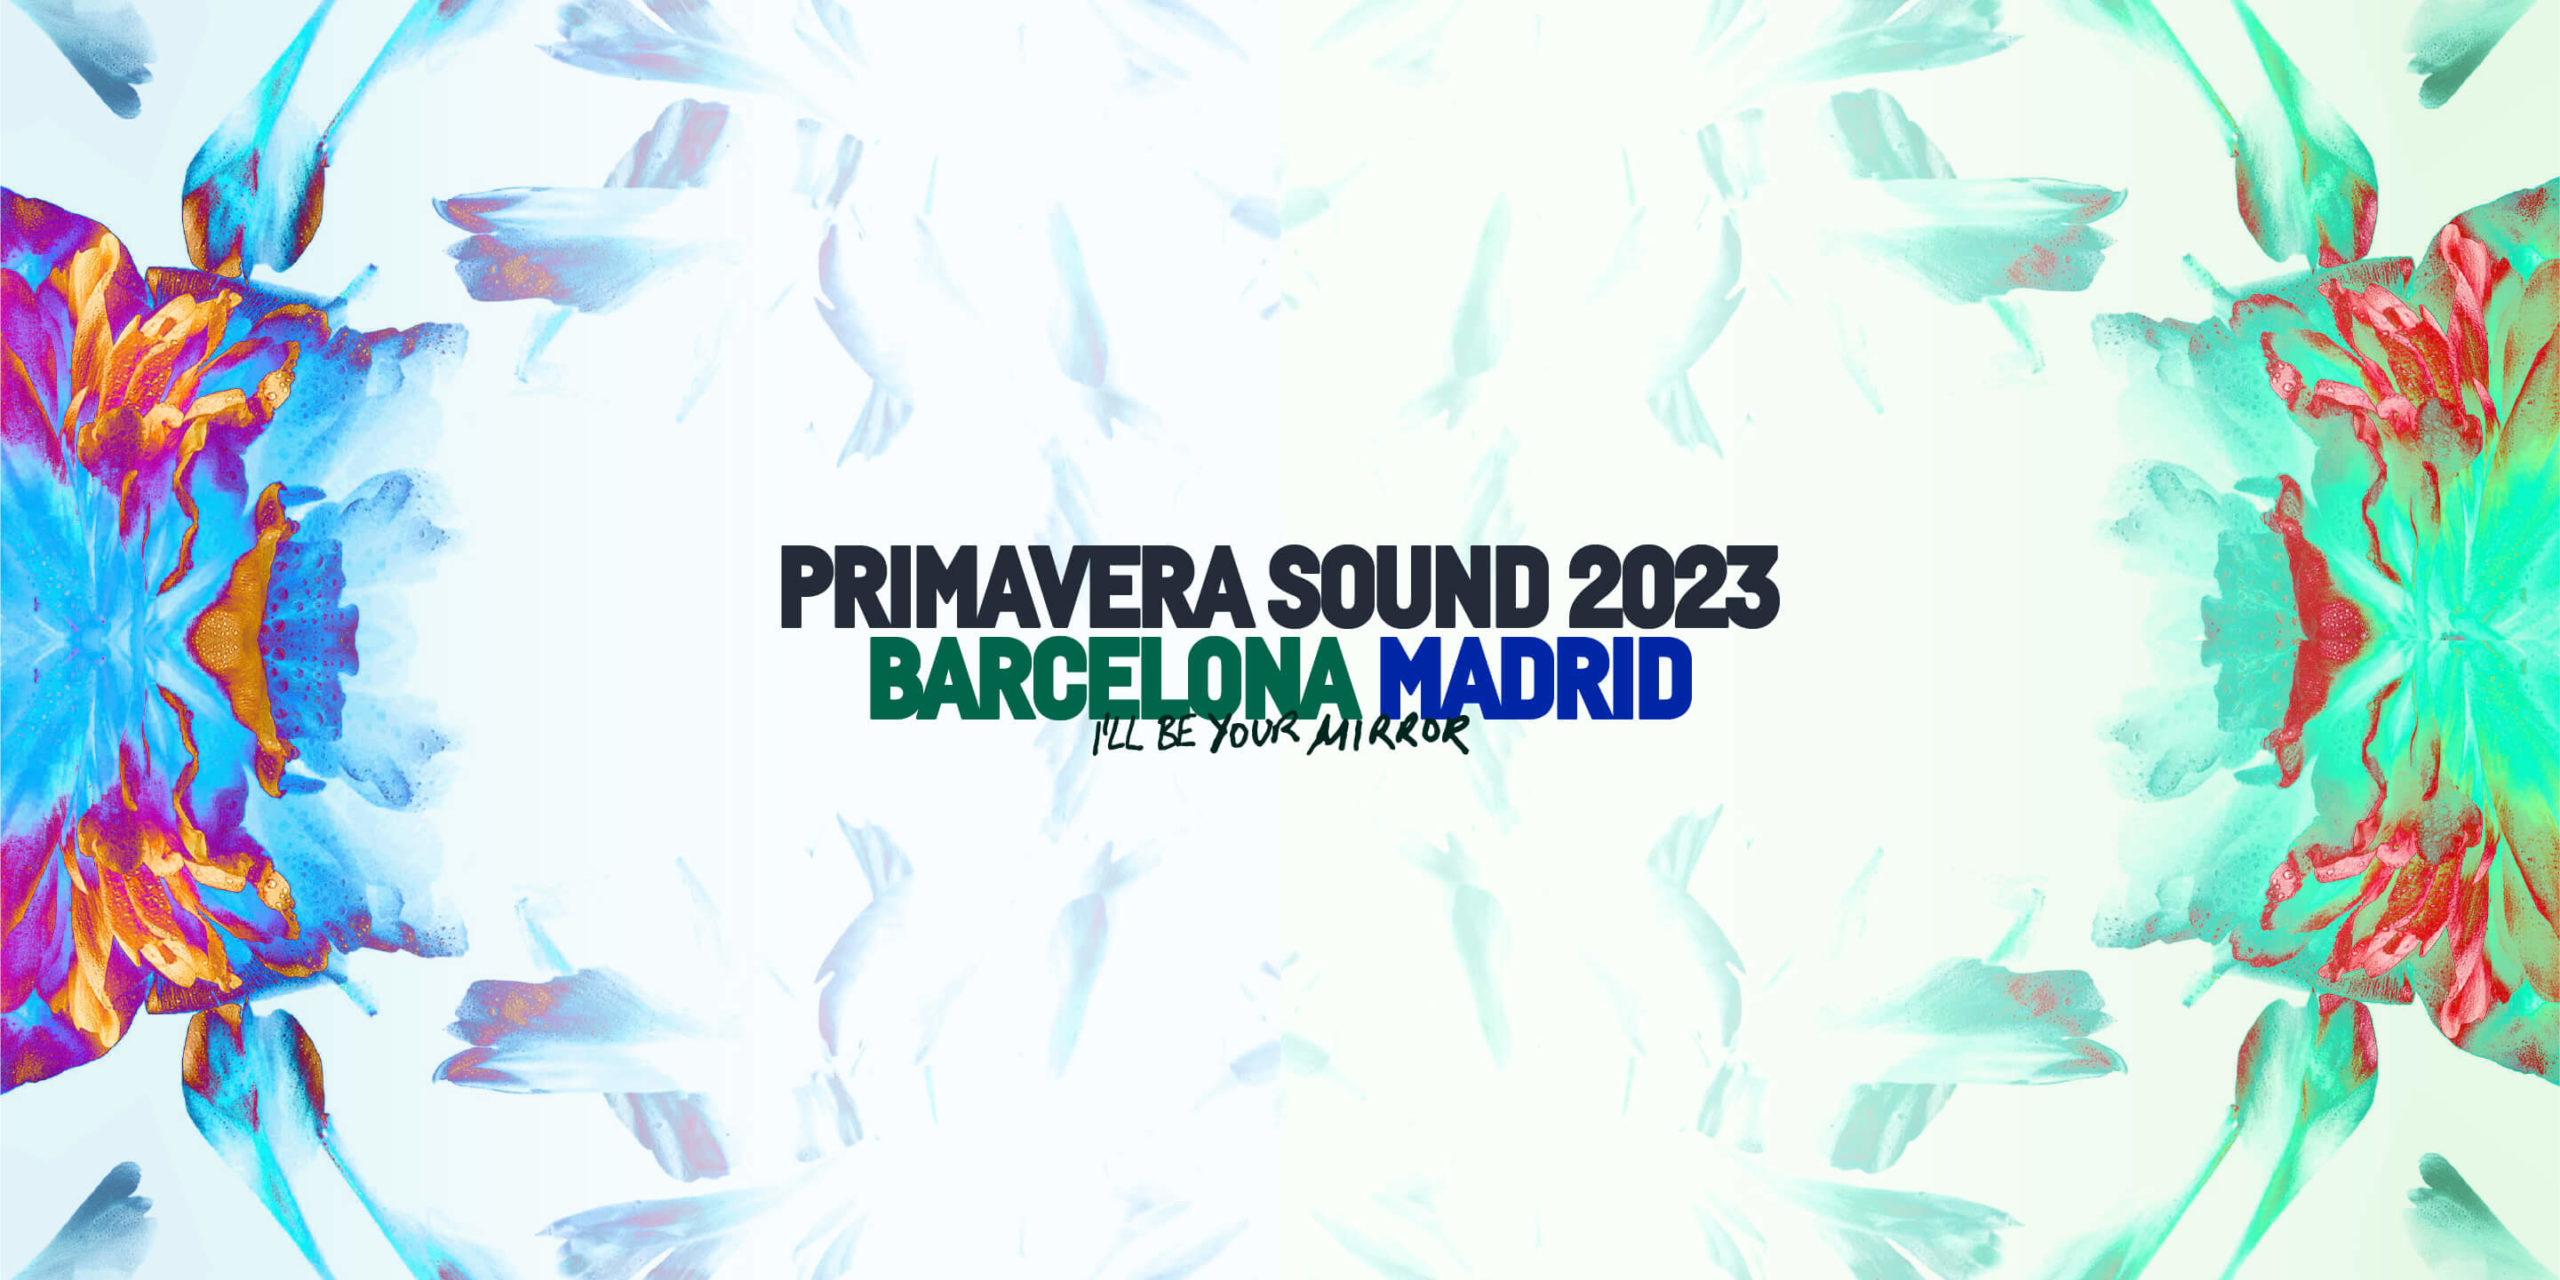 Primavera Sound 2023 BCN MAD